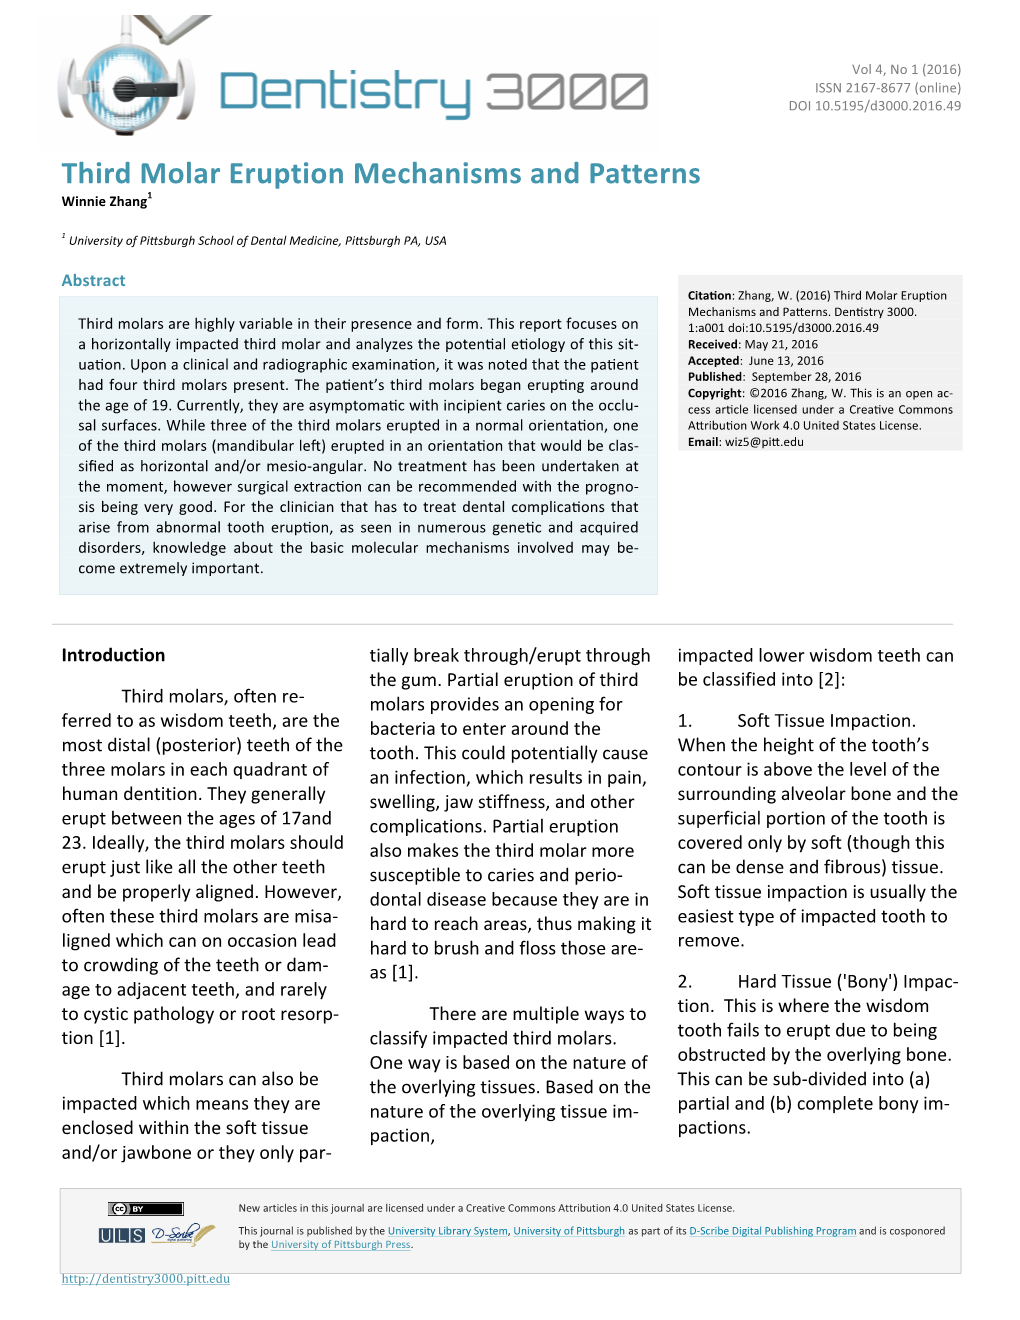 Third Molar Eruption Mechanisms and Patterns Winnie Zhang1